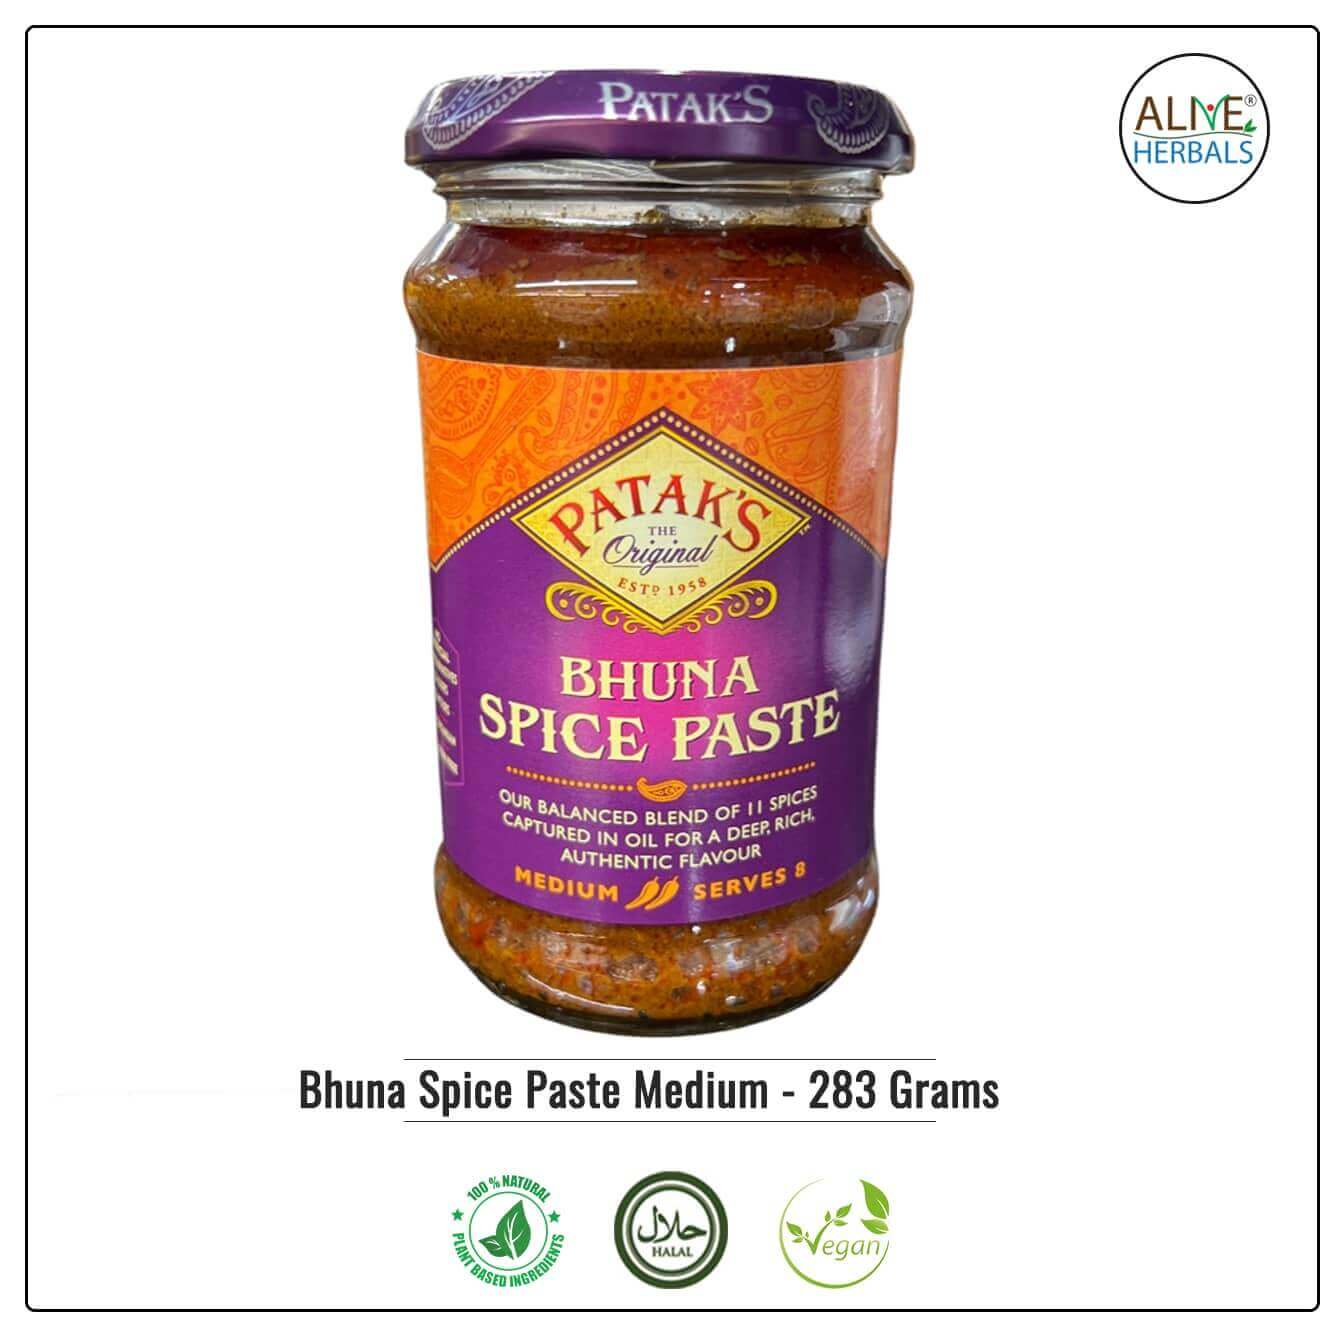 Bhuna Spice Paste Medium - Alive Herbals